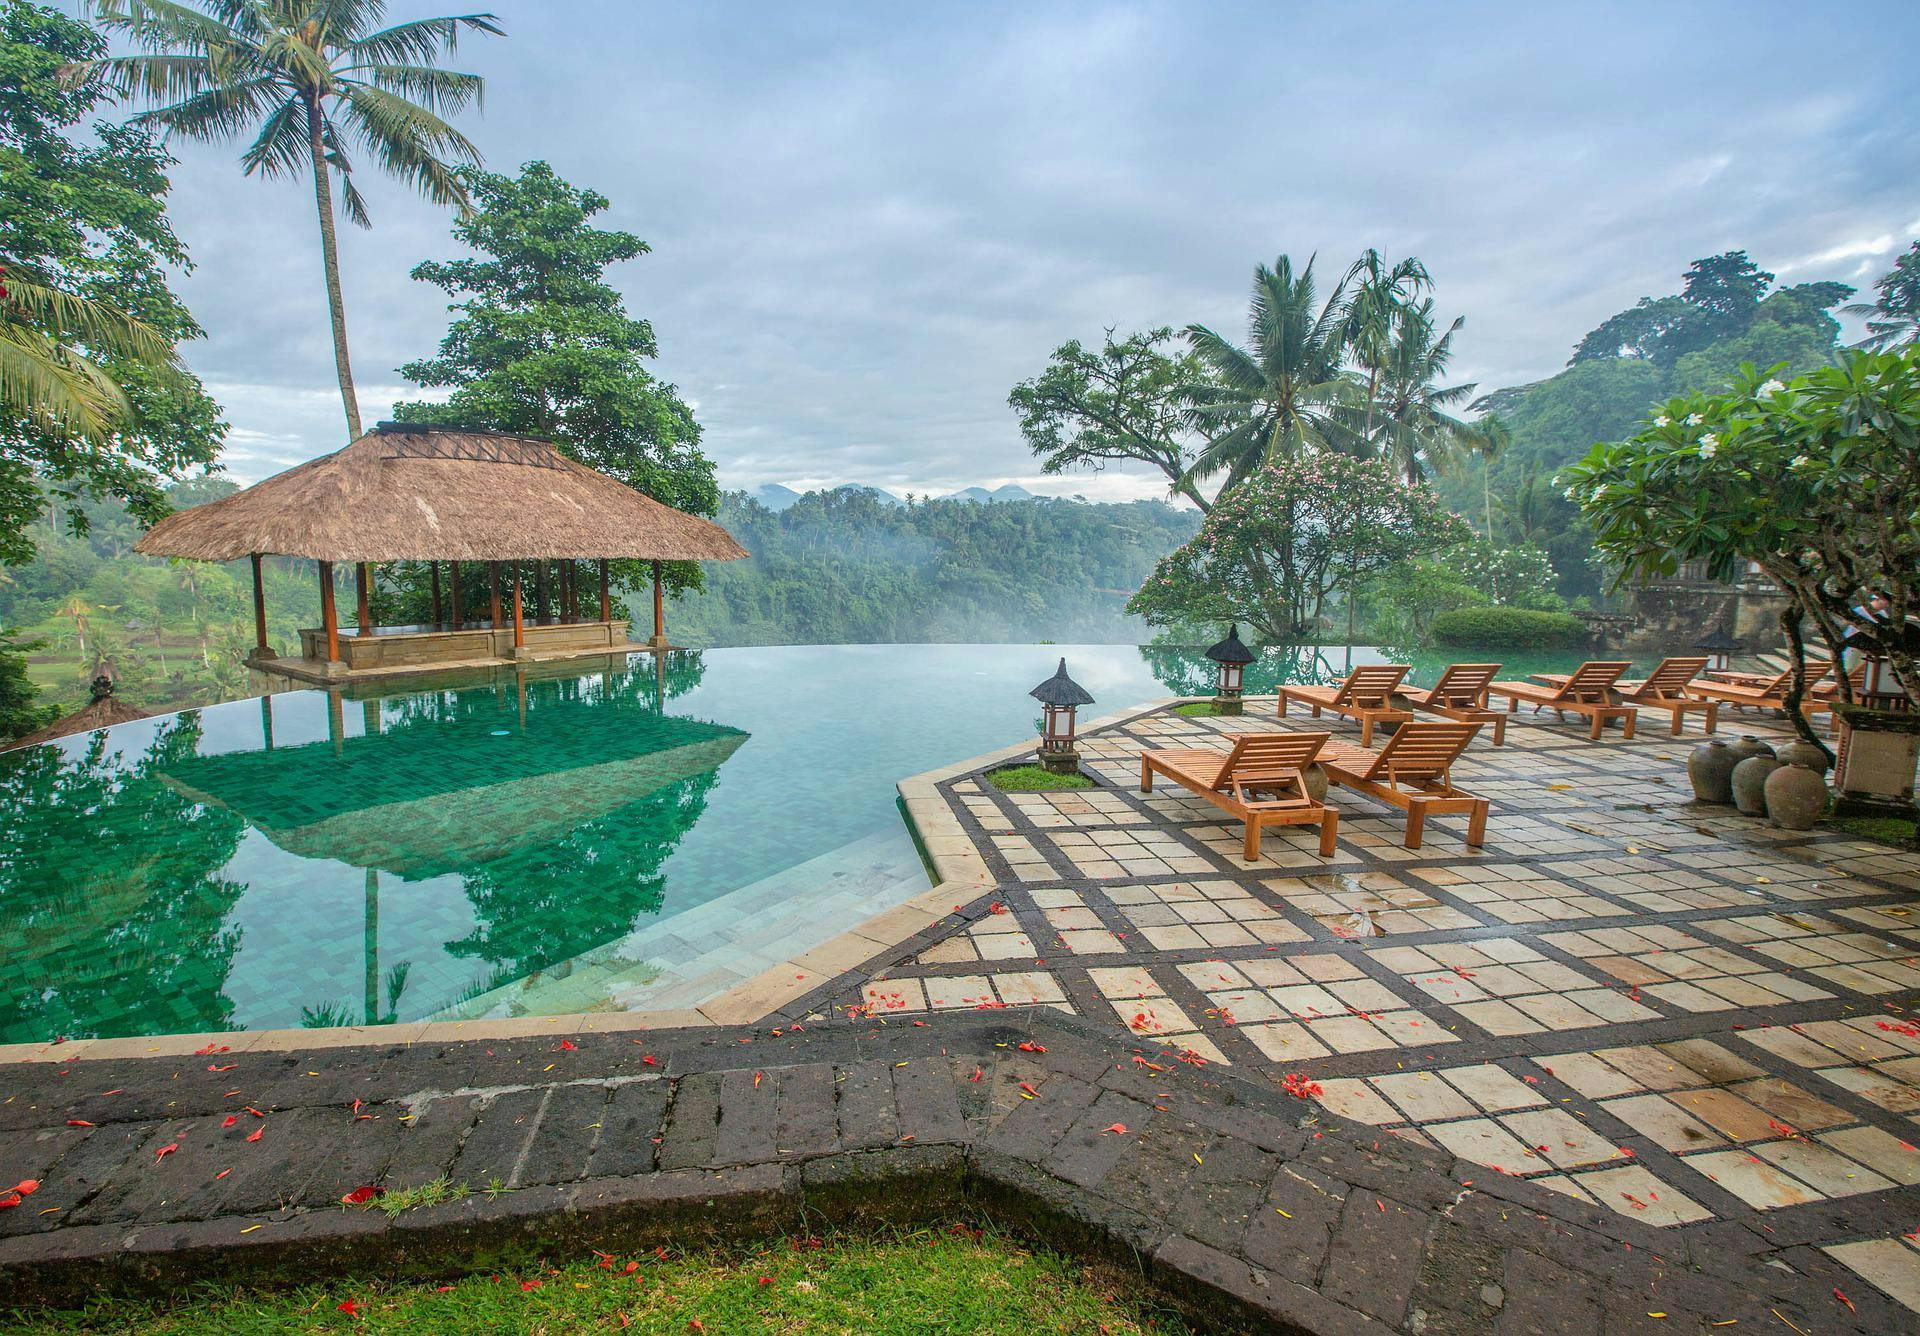 Real Estate Management Internships in Bali